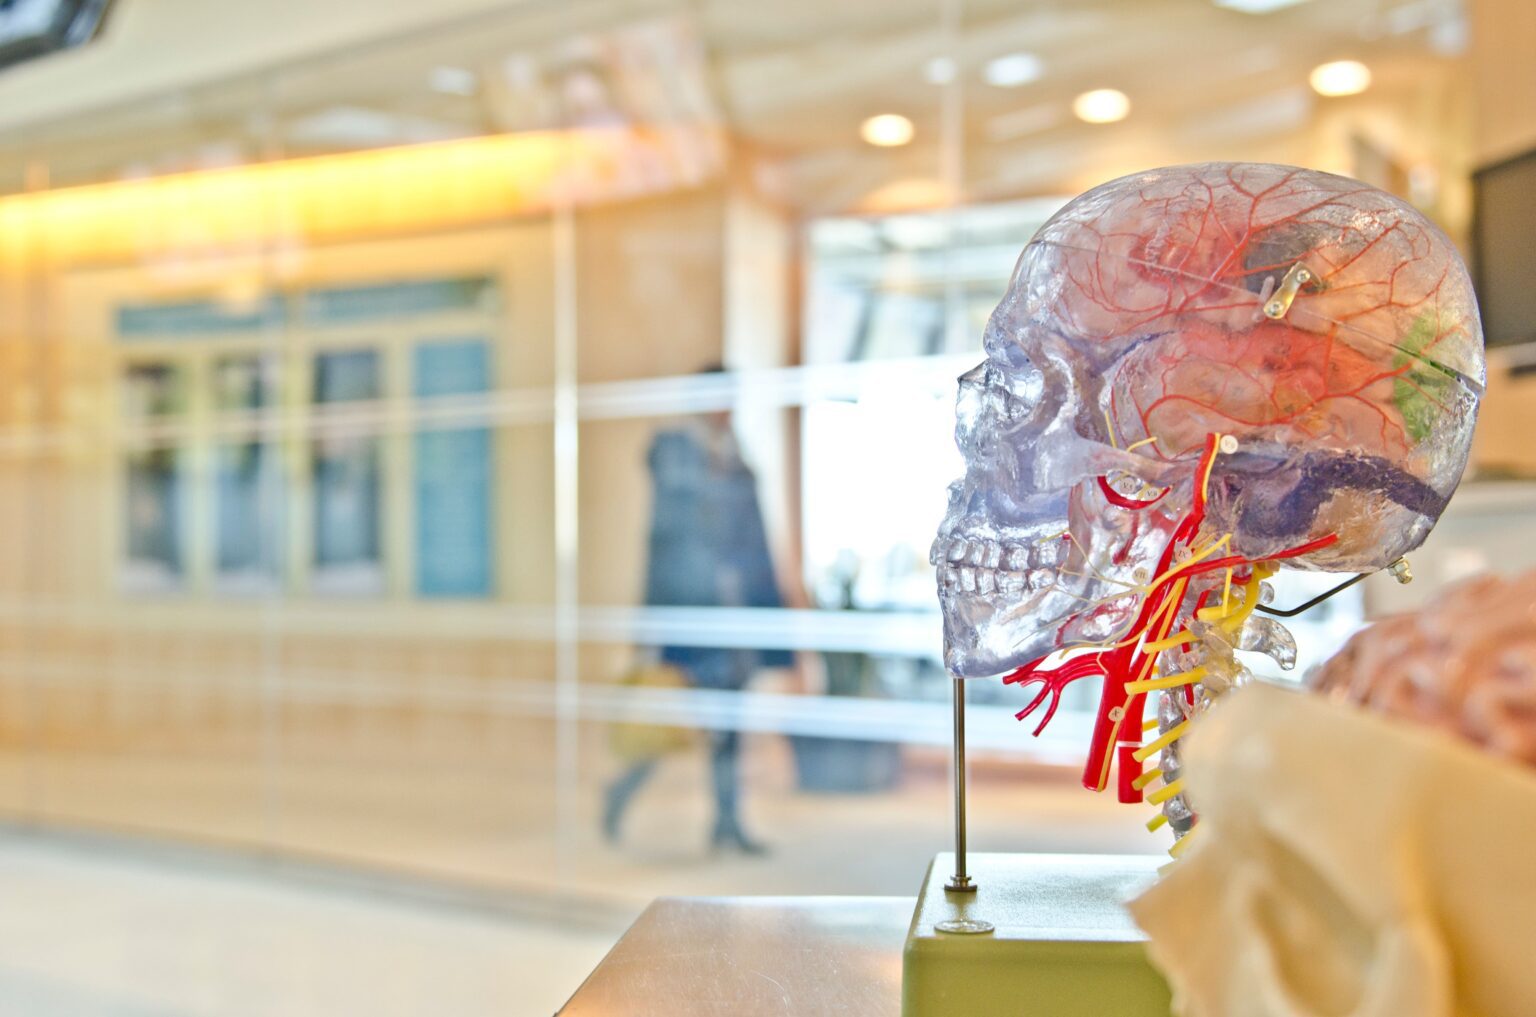 Anatomical brain in school environment